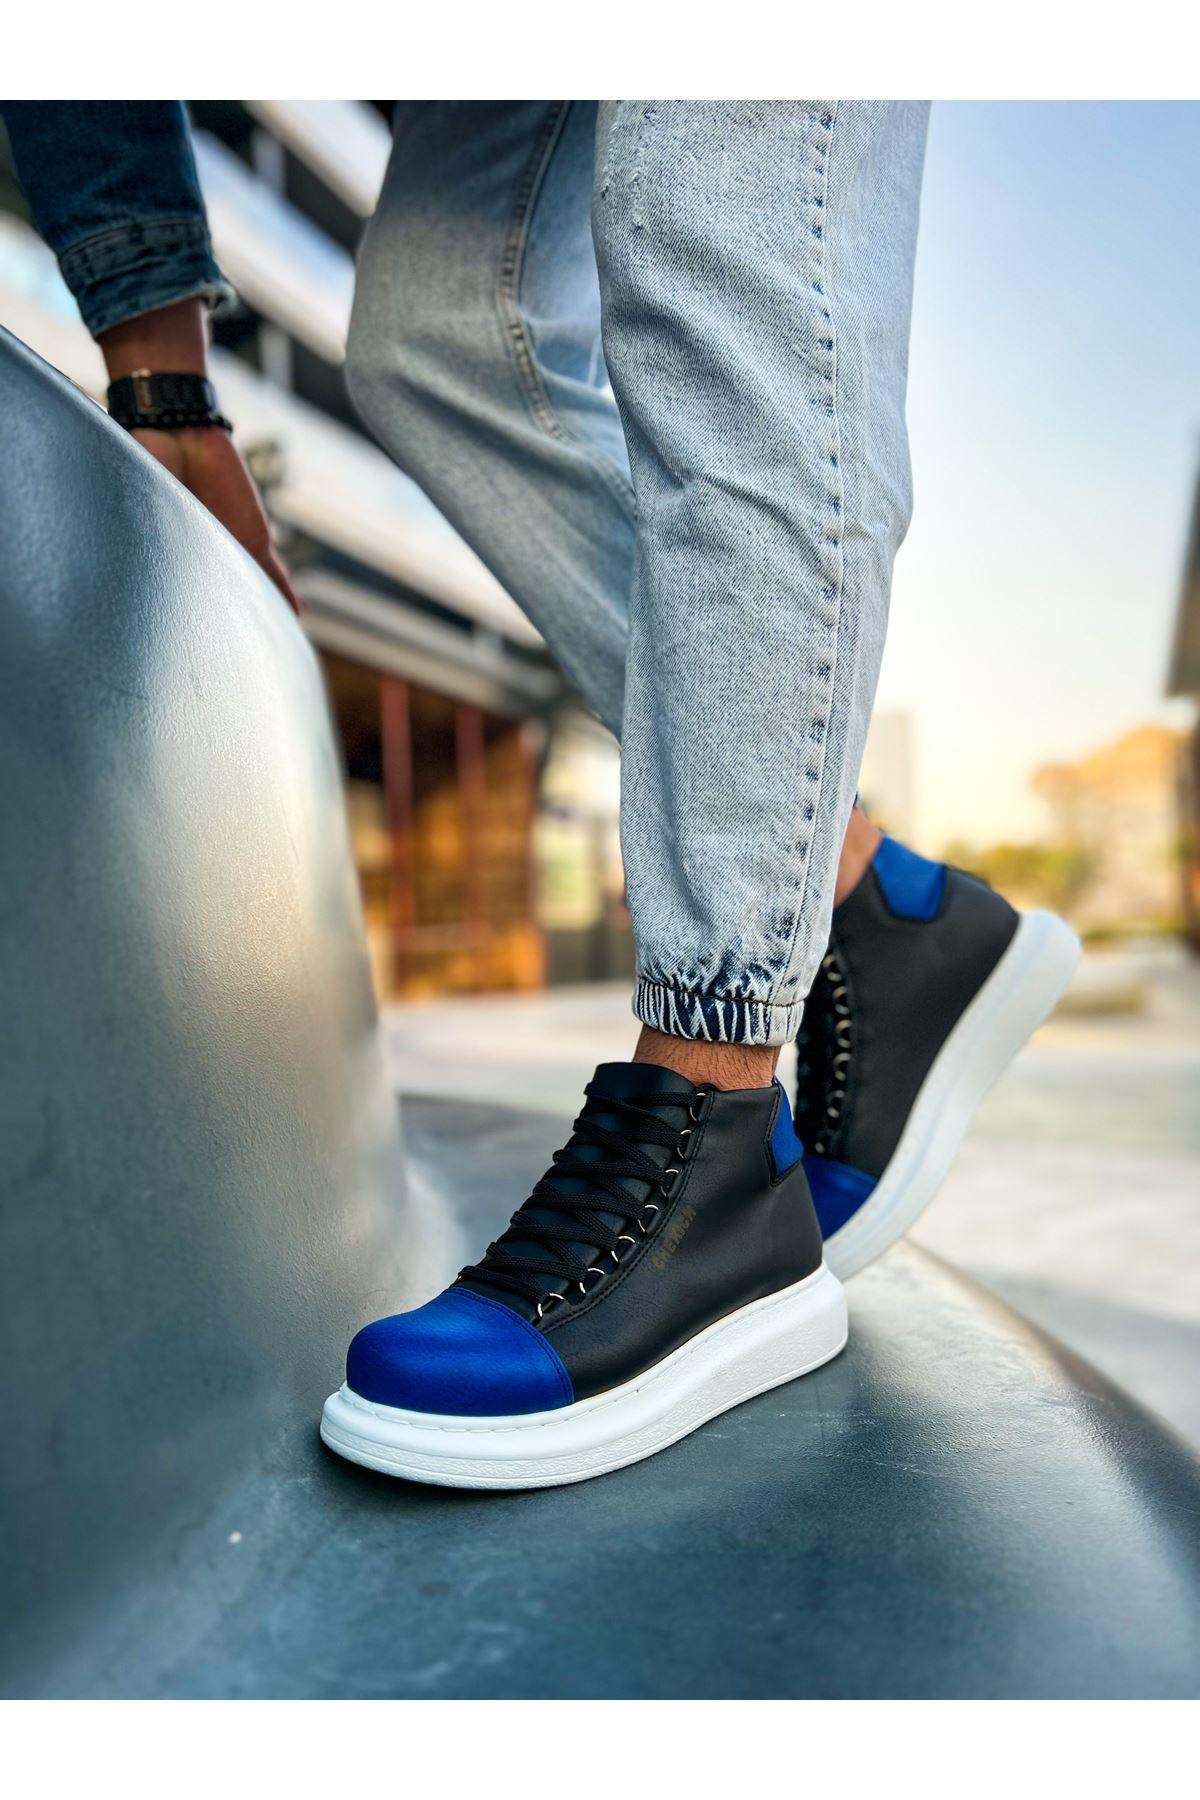 Chekich CH258 GBT Men's shoes sneakers Boots BLACK/SAX BLUE - STREET MODE ™